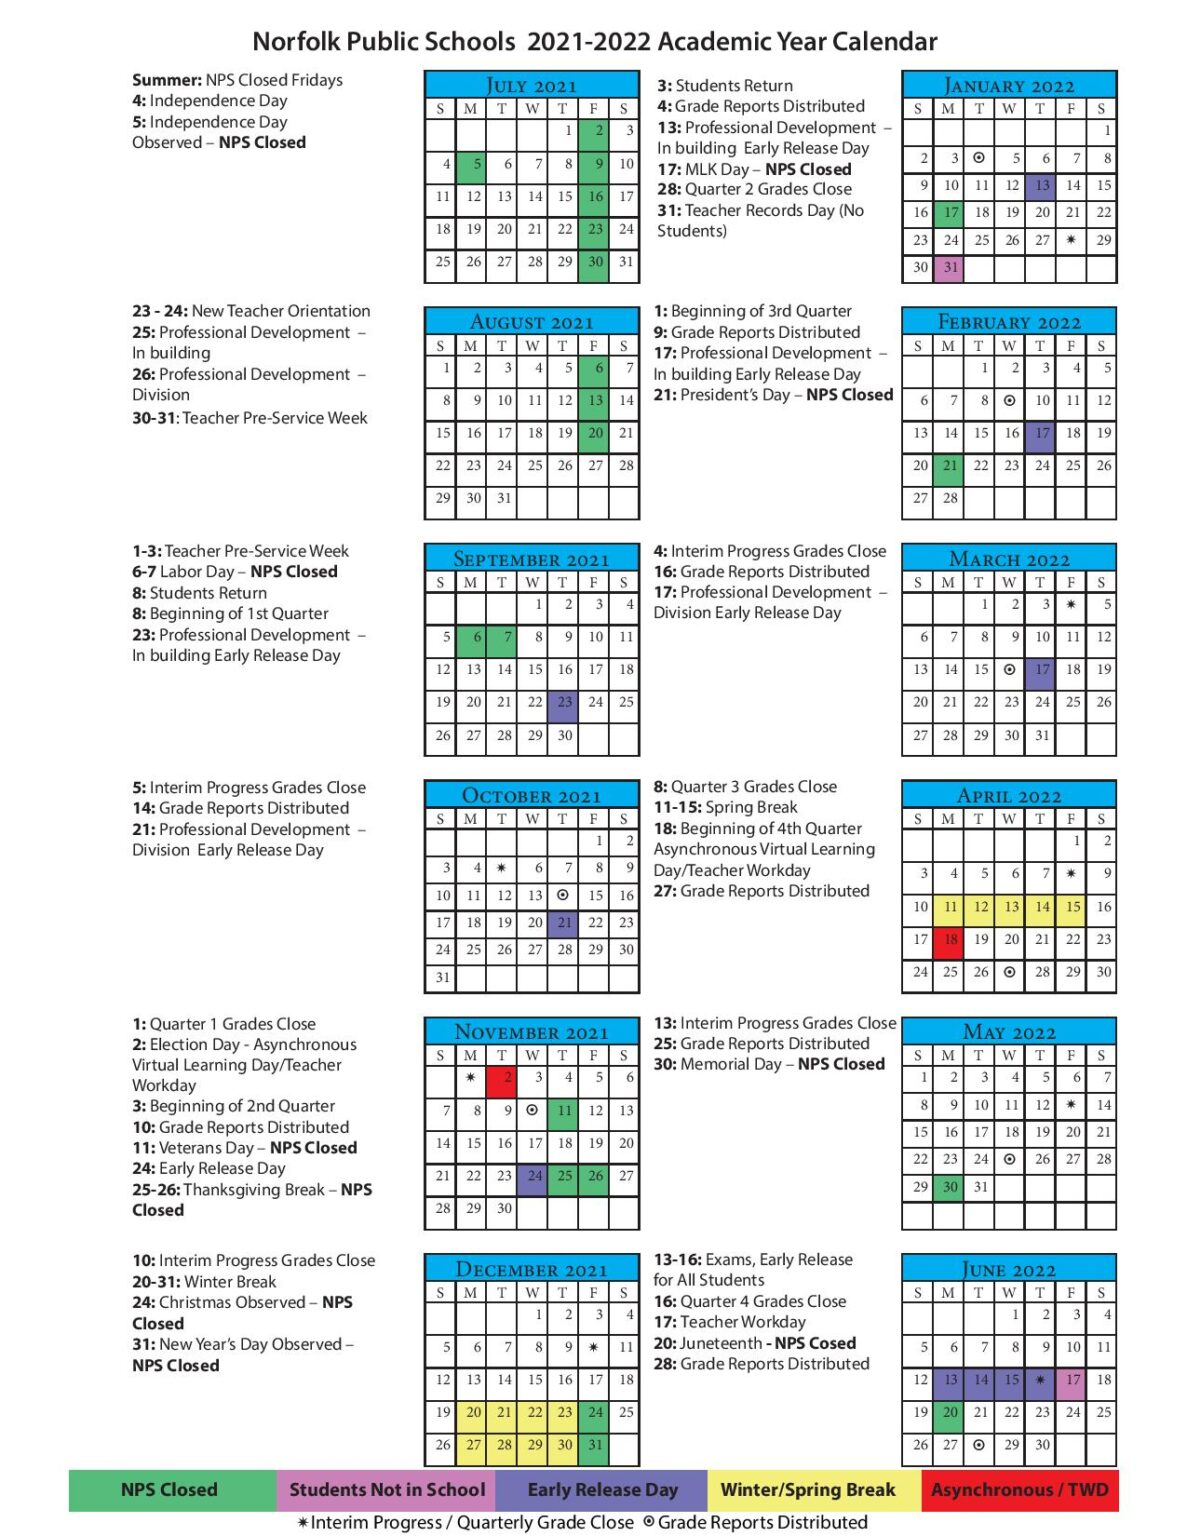 Norfolk Public Schools Calendar 2021-2022 In Pdf